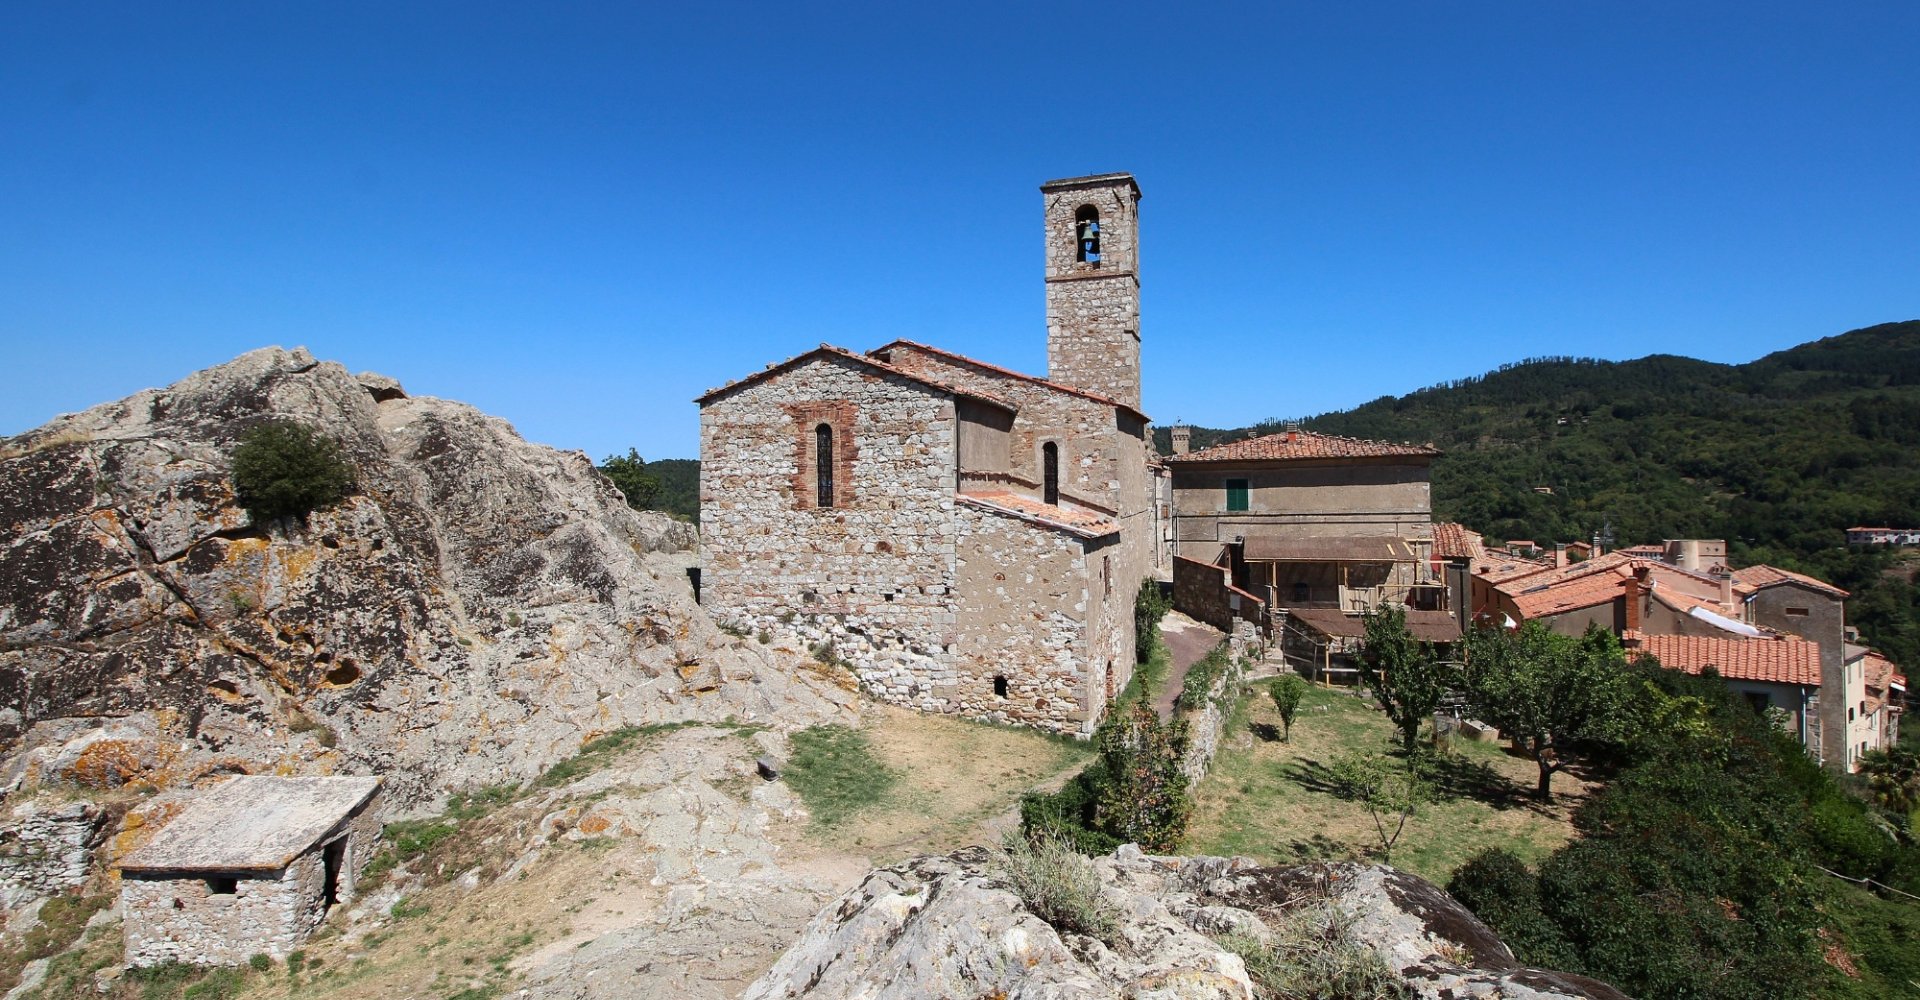 Church of San Martino, Roccatederighi